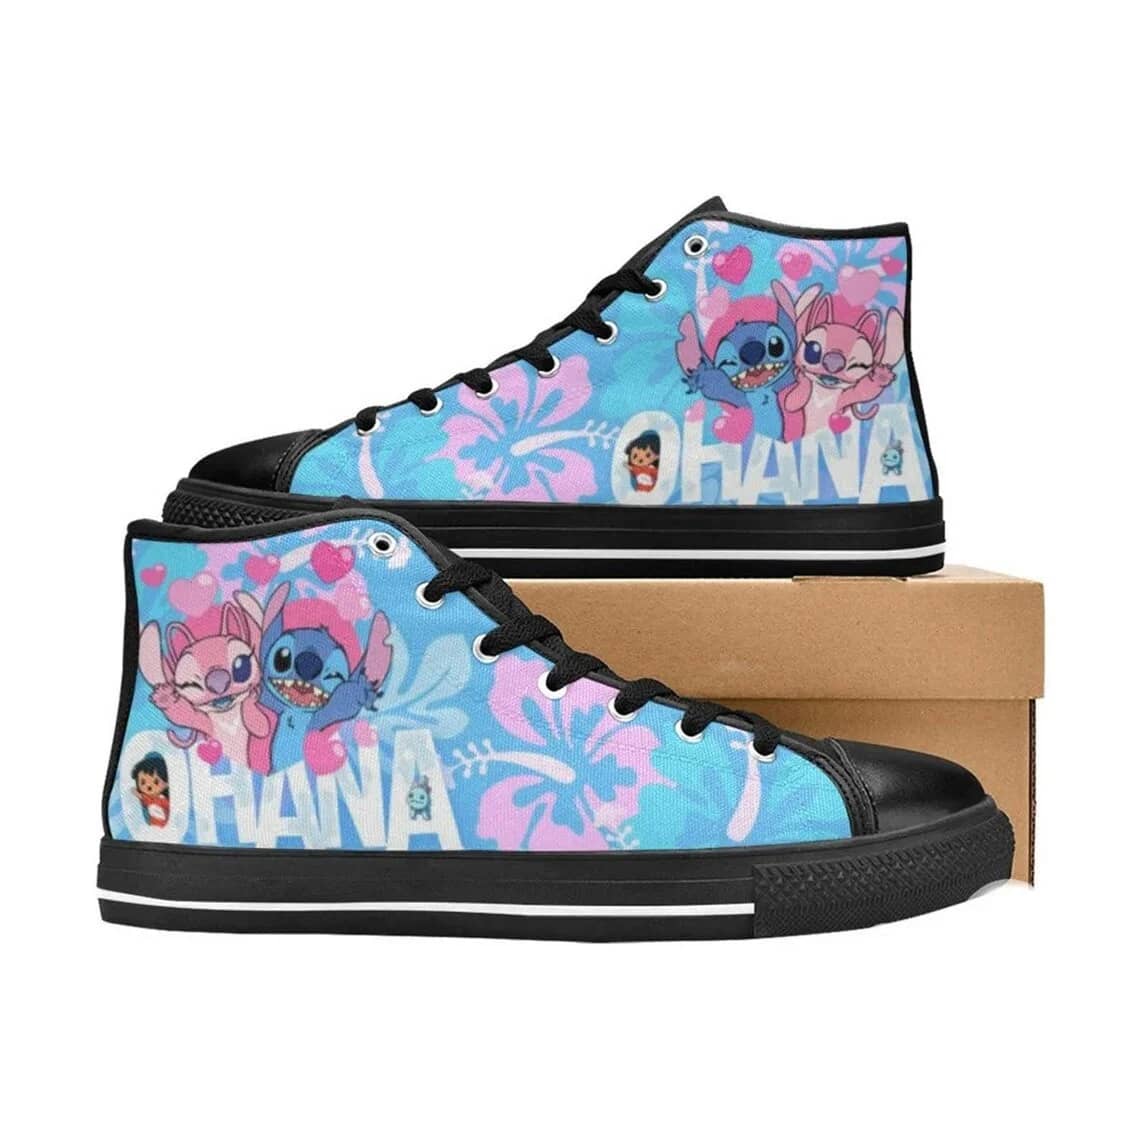 Stitch Style 8 Amazon Custom Disney High Top Shoes